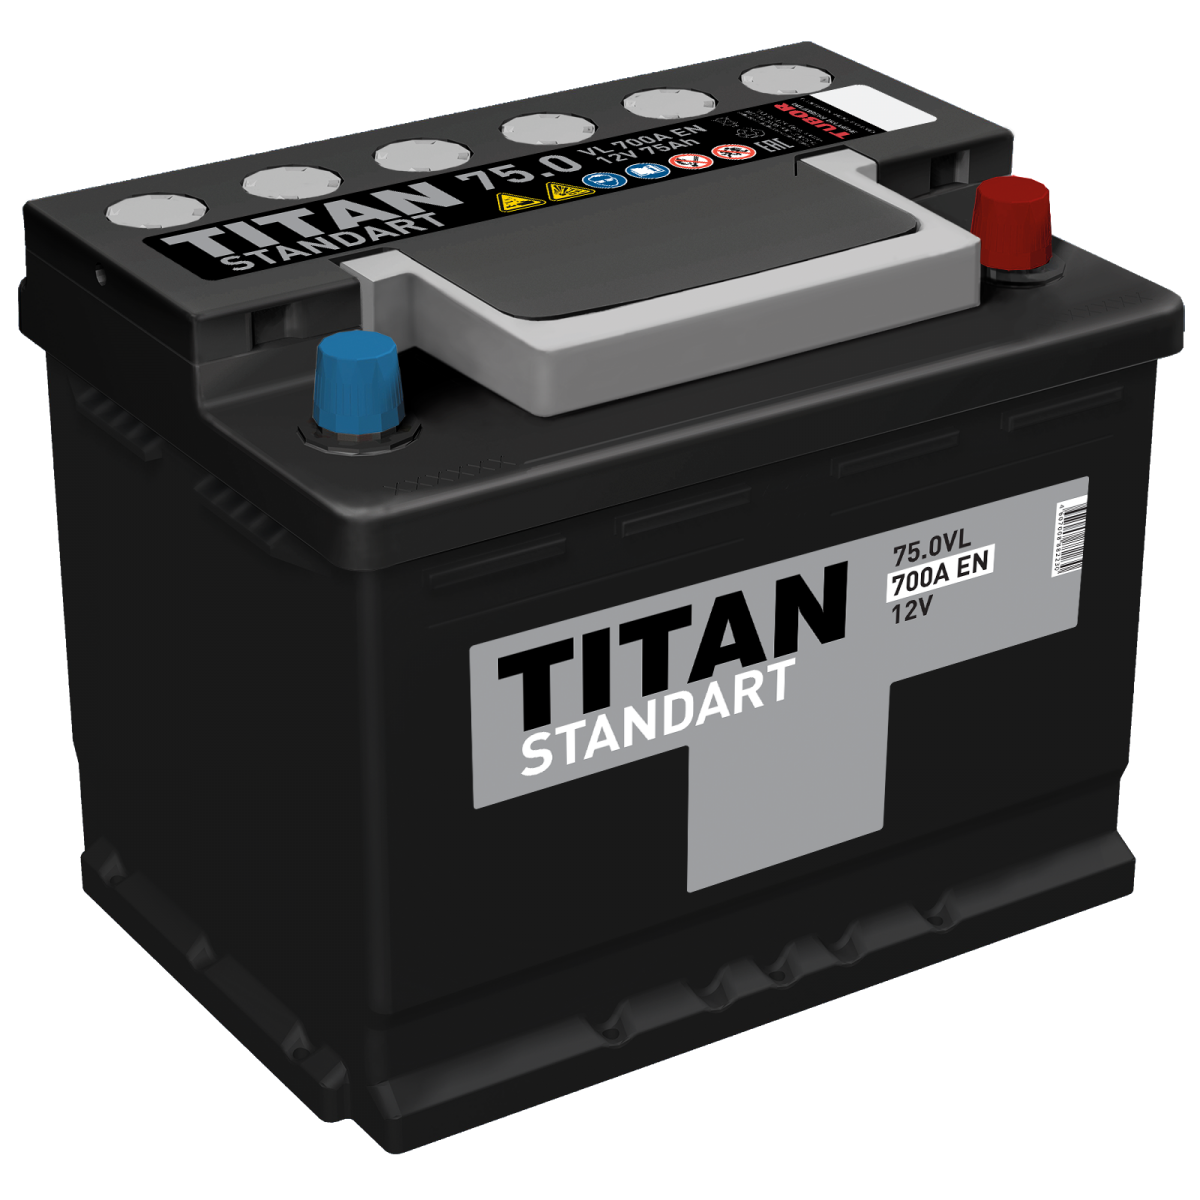 Аккумуляторы для автомобиля купить 75. Аккумулятор Titan Standart 75ah. Автомобильный аккумулятор Titan Standart 6ct-66.1 VL. АКБ Титан стандарт 60а/ч. Аккумуляторная батарея Titan Standart 60.1.